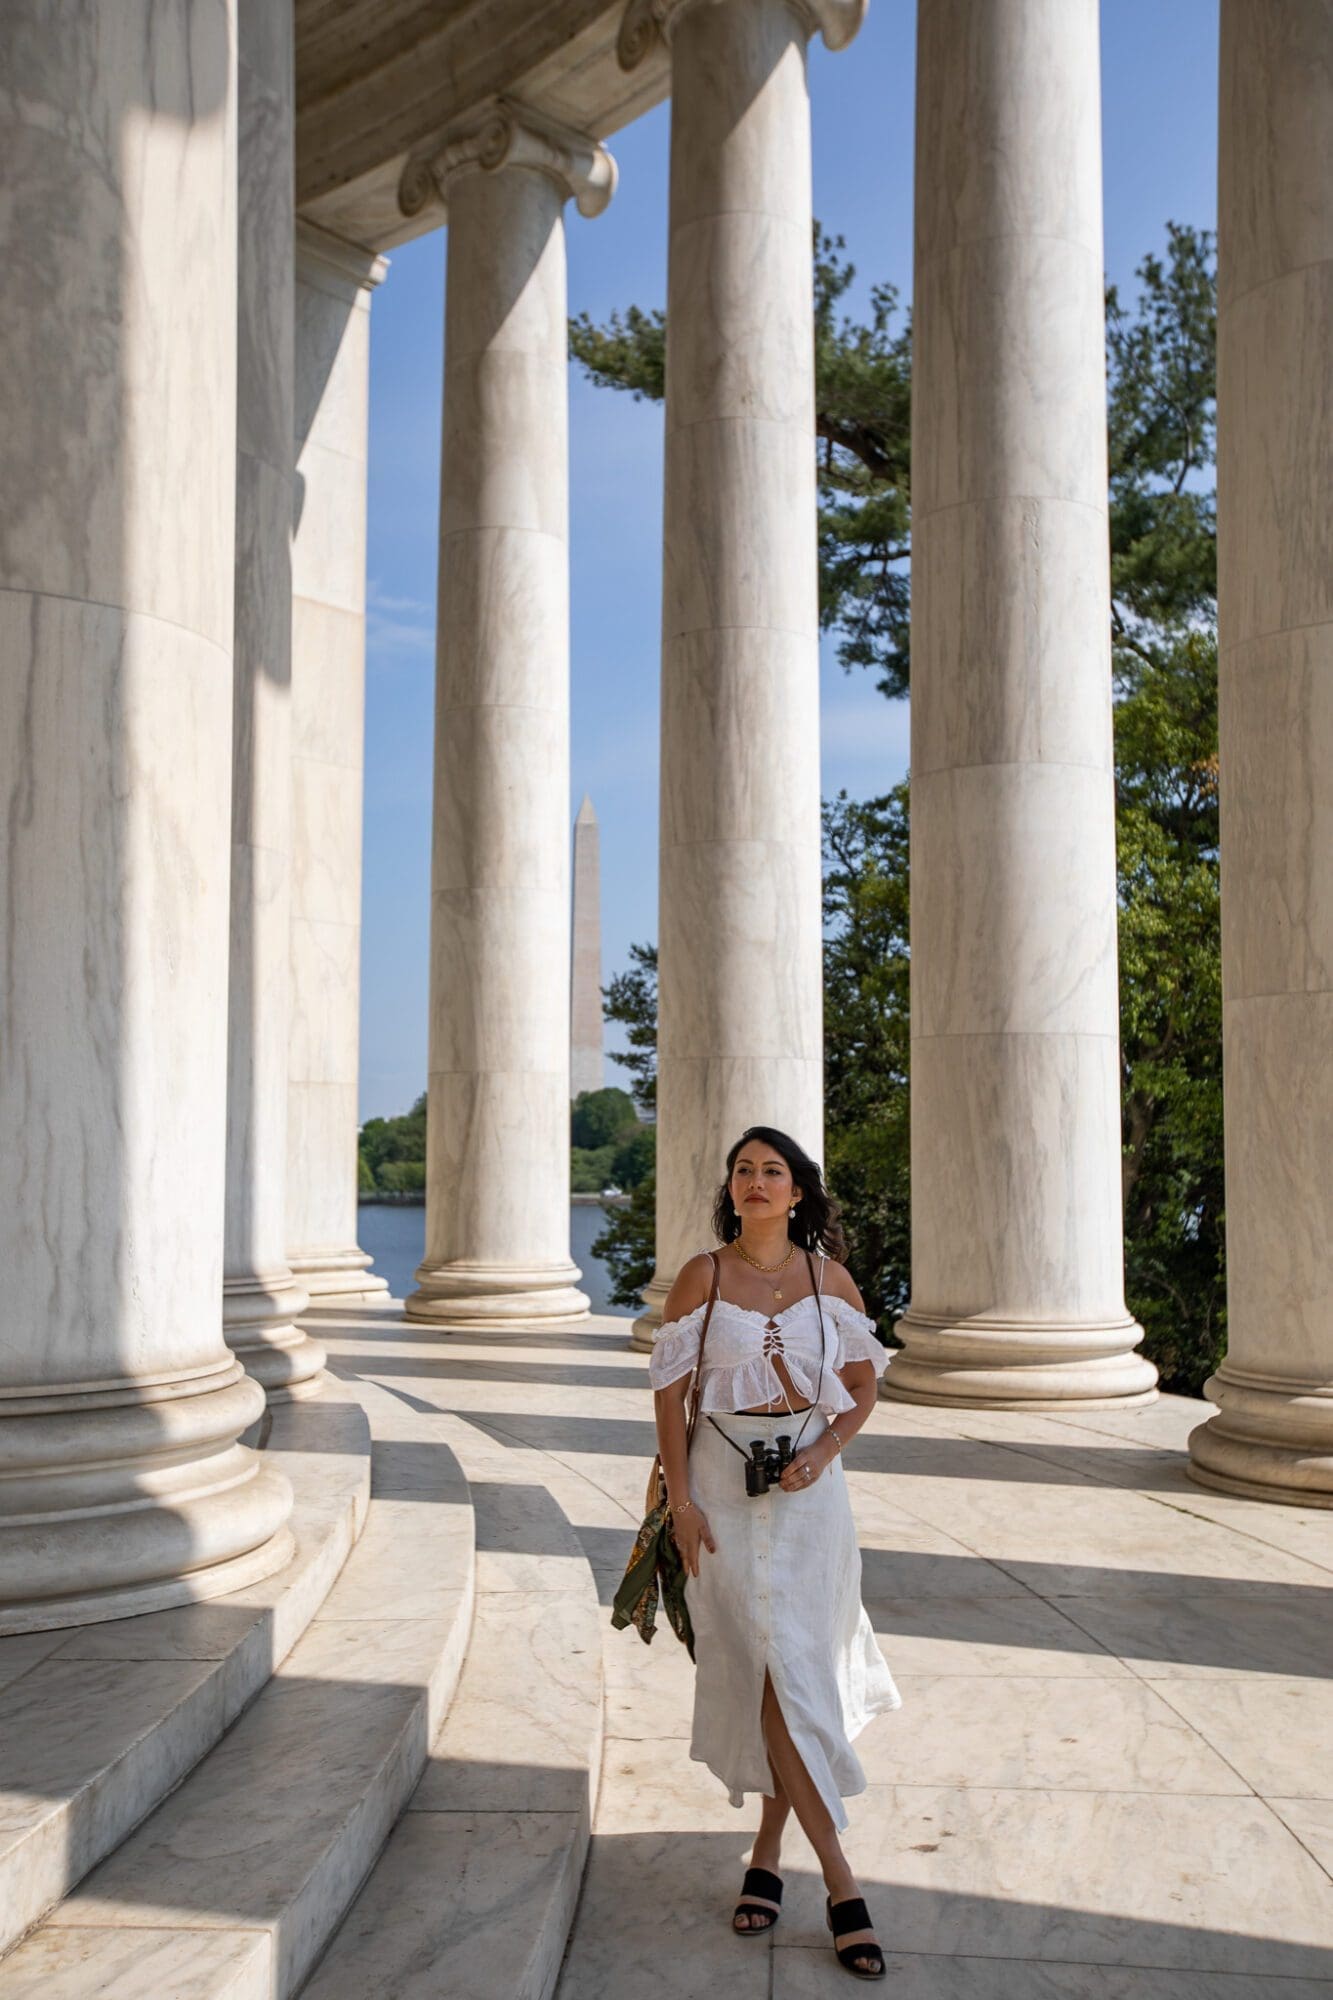 Thomas Jefferson Memorial Washington DC Travel Guide Things to Do